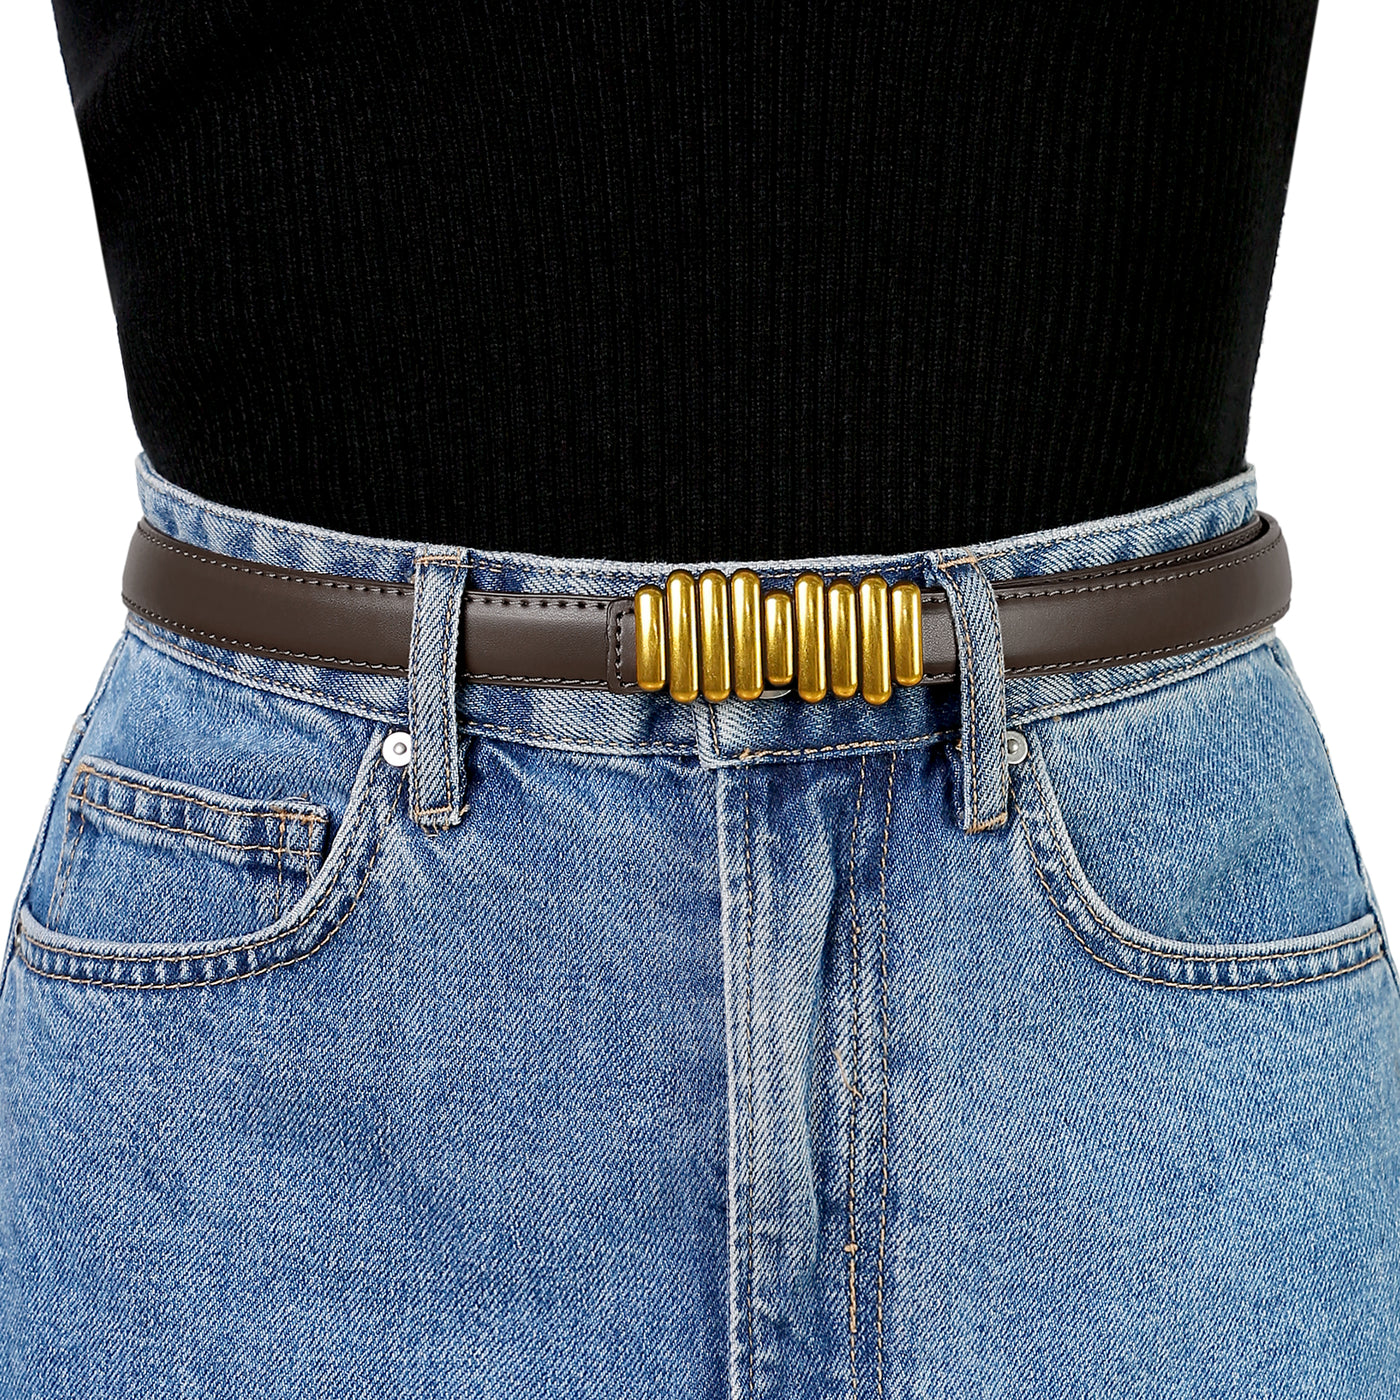 Allegra K Women's Faux Leather Belts Jeans Dress Thin Waist Belt with Chic Designer Buckle